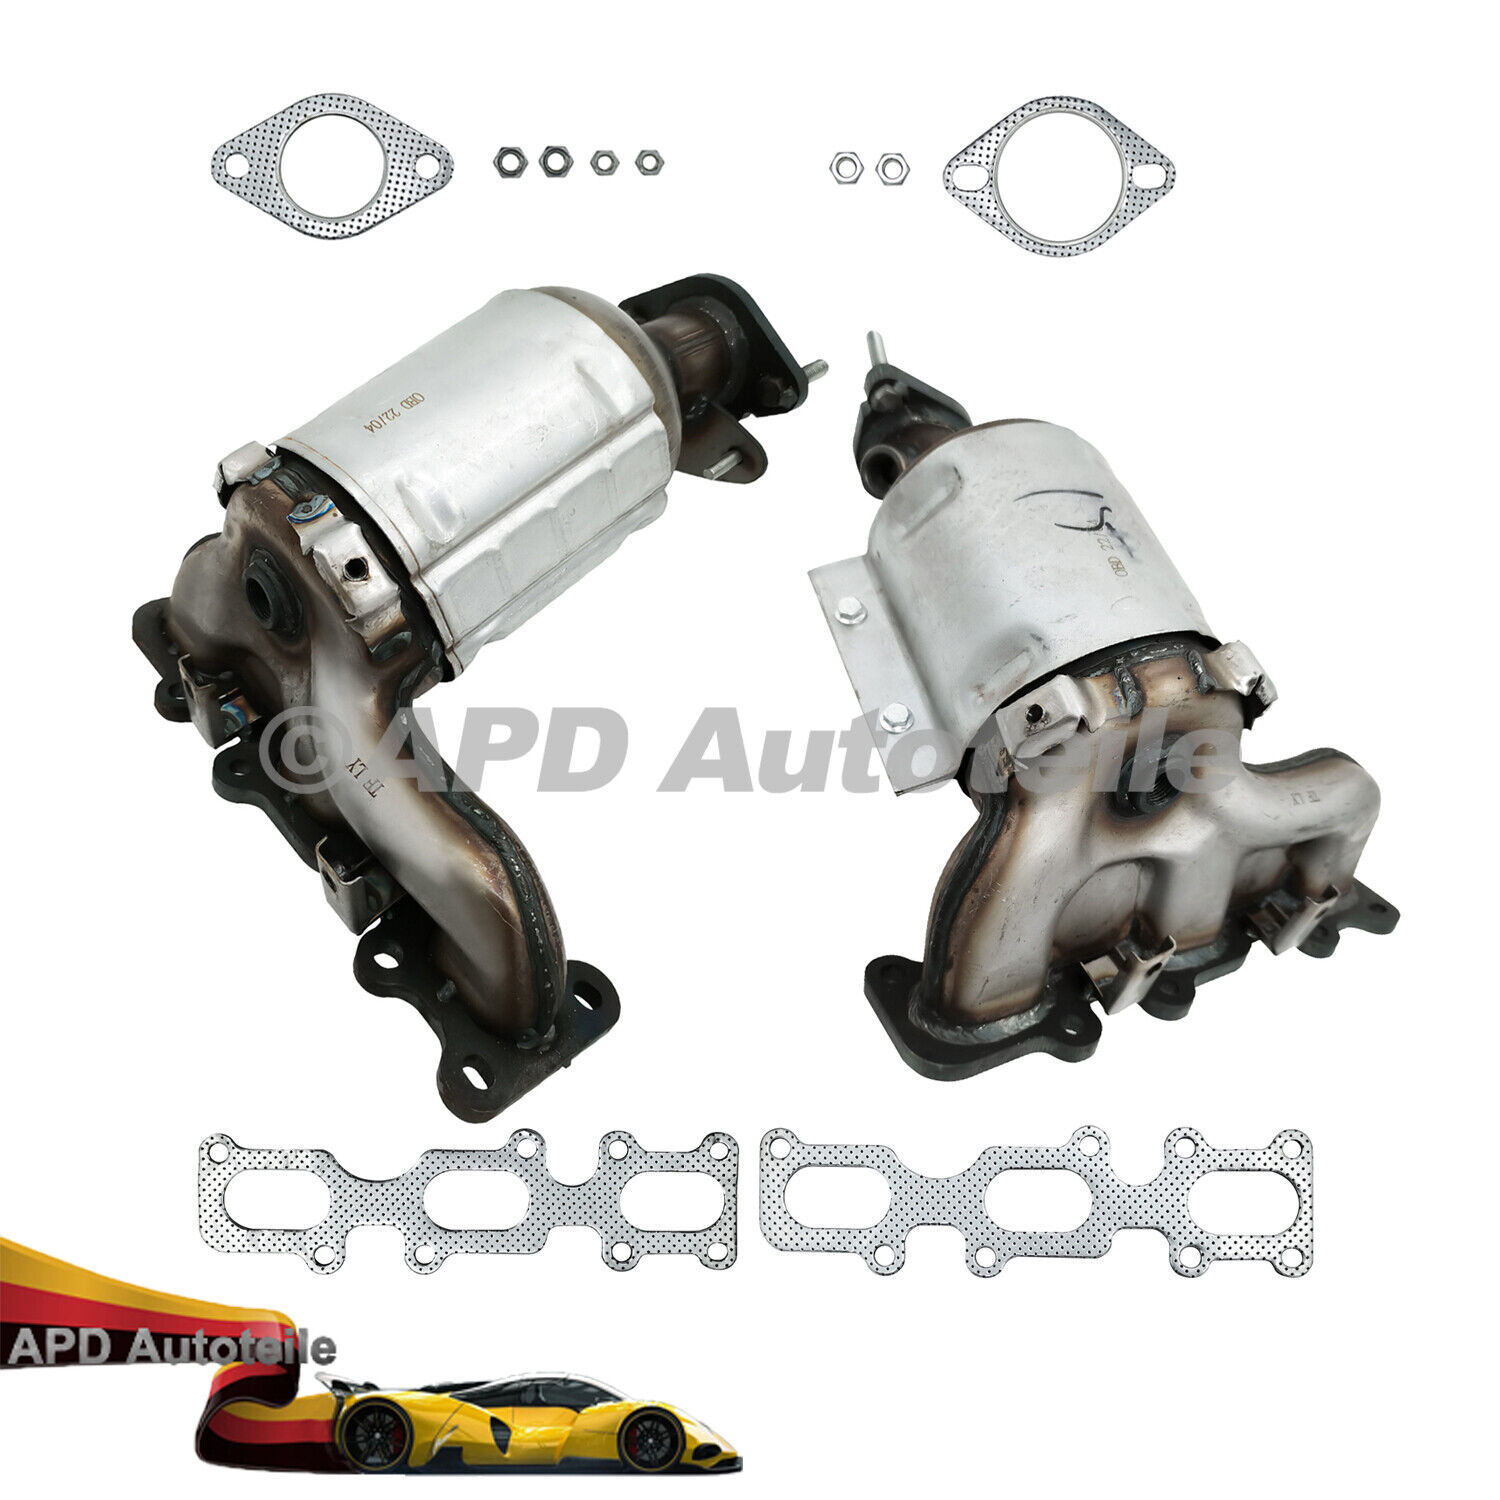 Pair Engine Exhaust Manifold Catalytic Converter for Ford Explorer Taurus MKZ V6